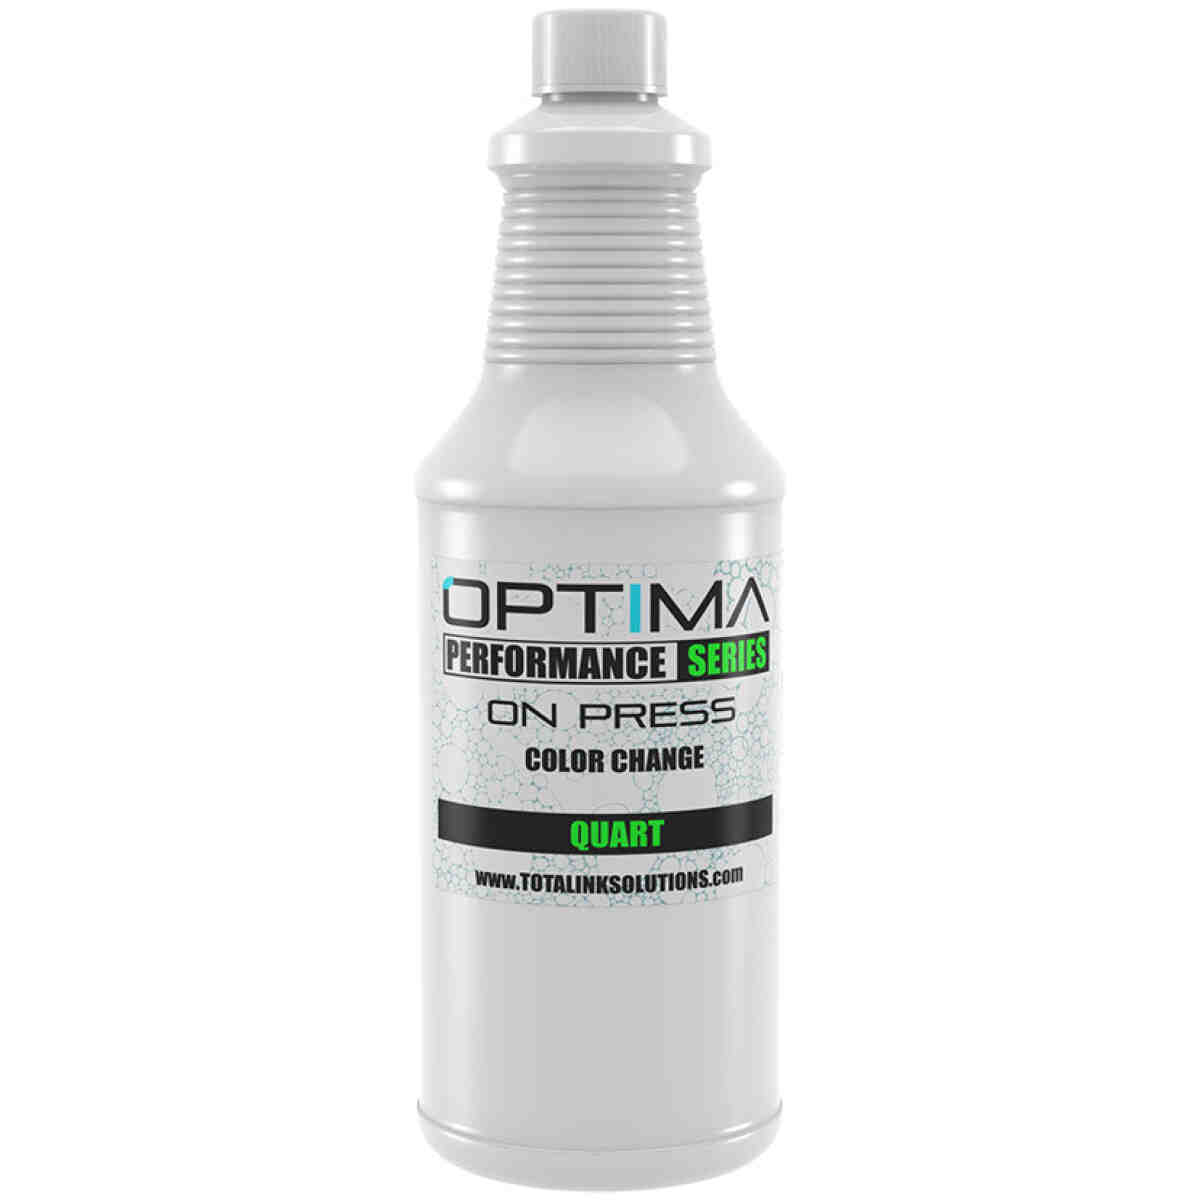 Opti-On Press Color Change OPTIMA PERFORMANCE SERIES®